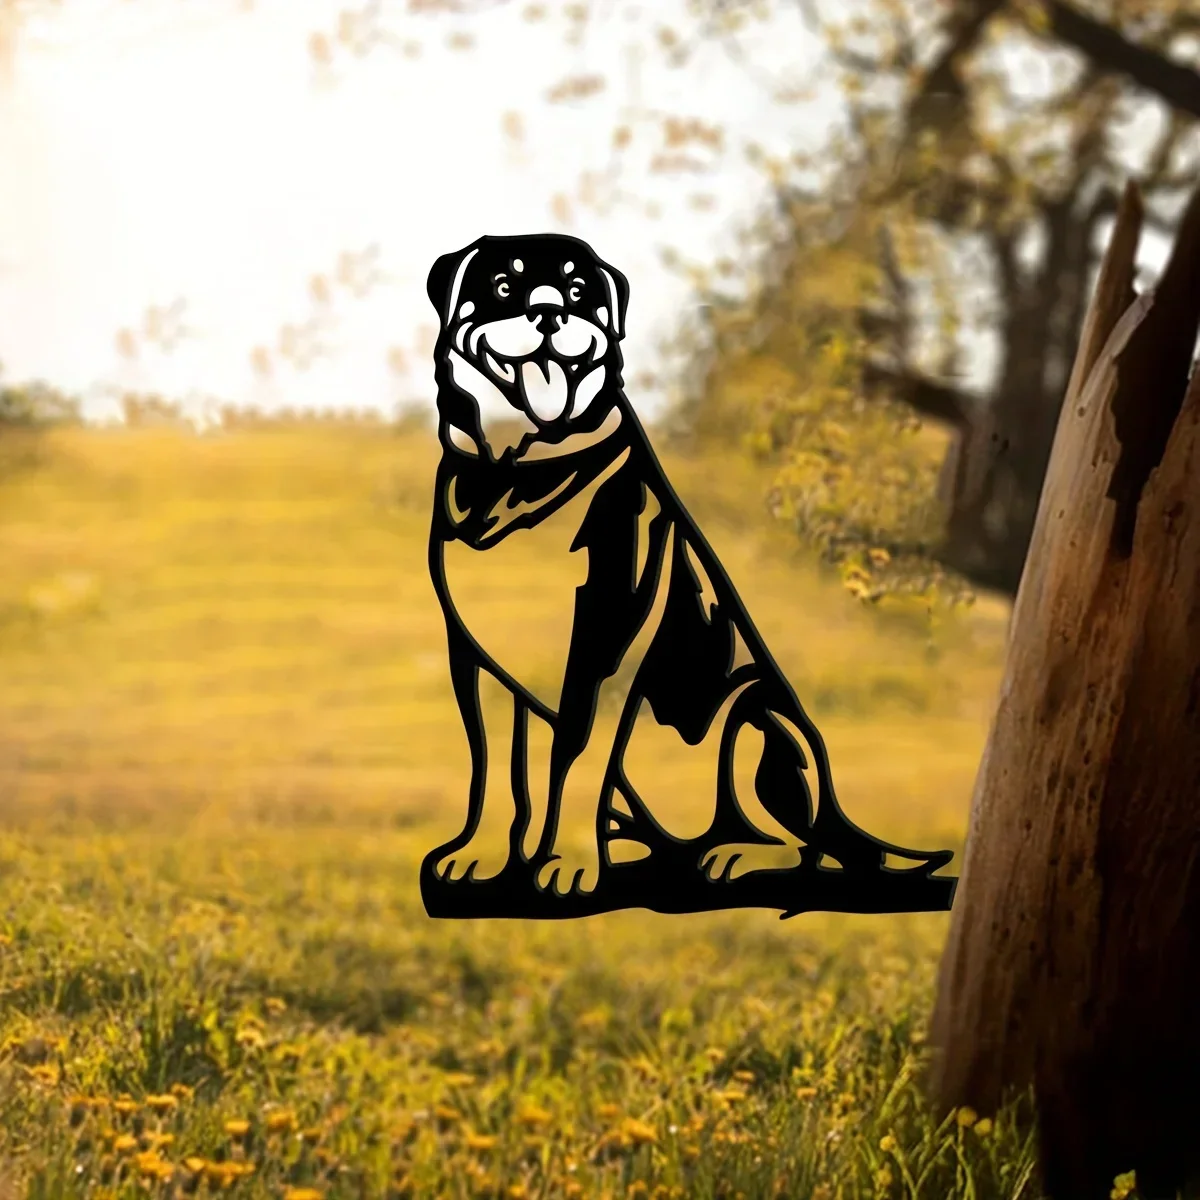 

HELLOYOUNG Metal Rottweiler Silhouette Puppy Dog Sign Cutout Rustic Outdoor Decoration Home Garden Decor Housewarming Gift Dog